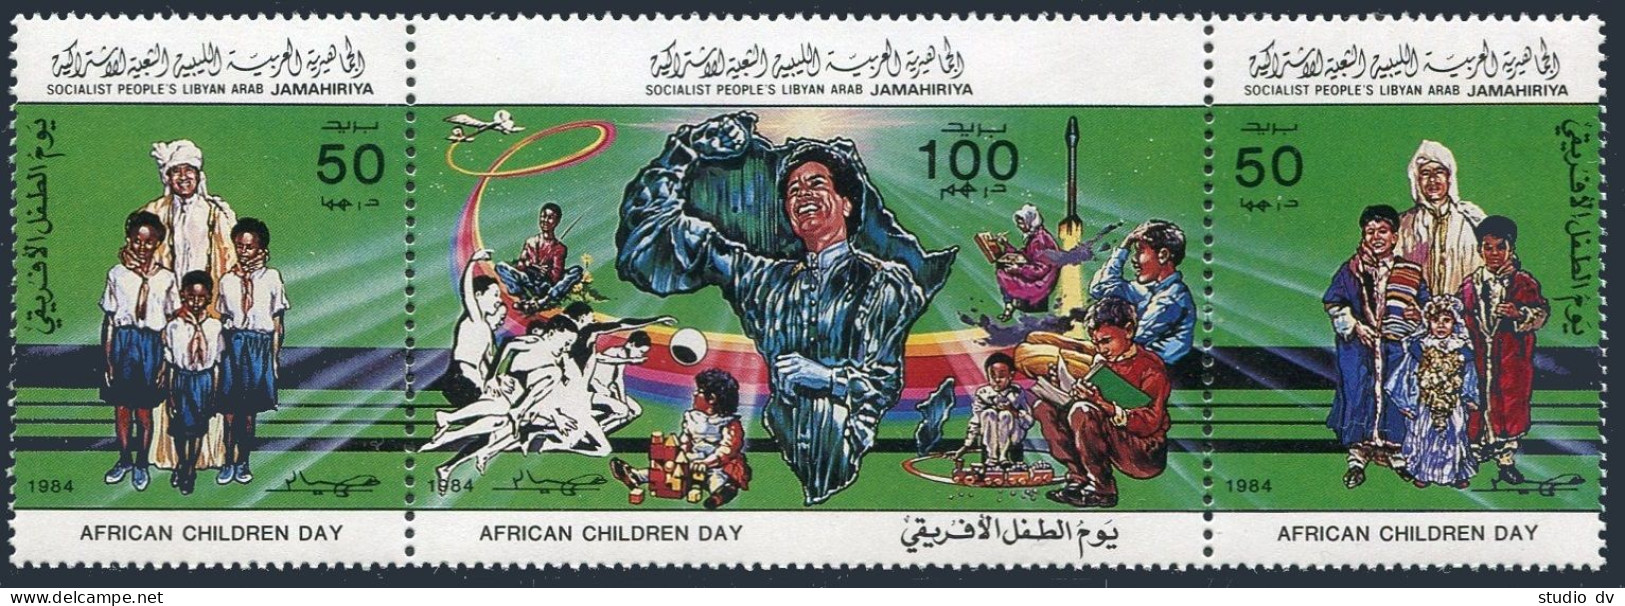 Libya 1165 Ac Strip,MNH.Michel 1269-1271. African Children's Day,1984.Khadafy, - Libya